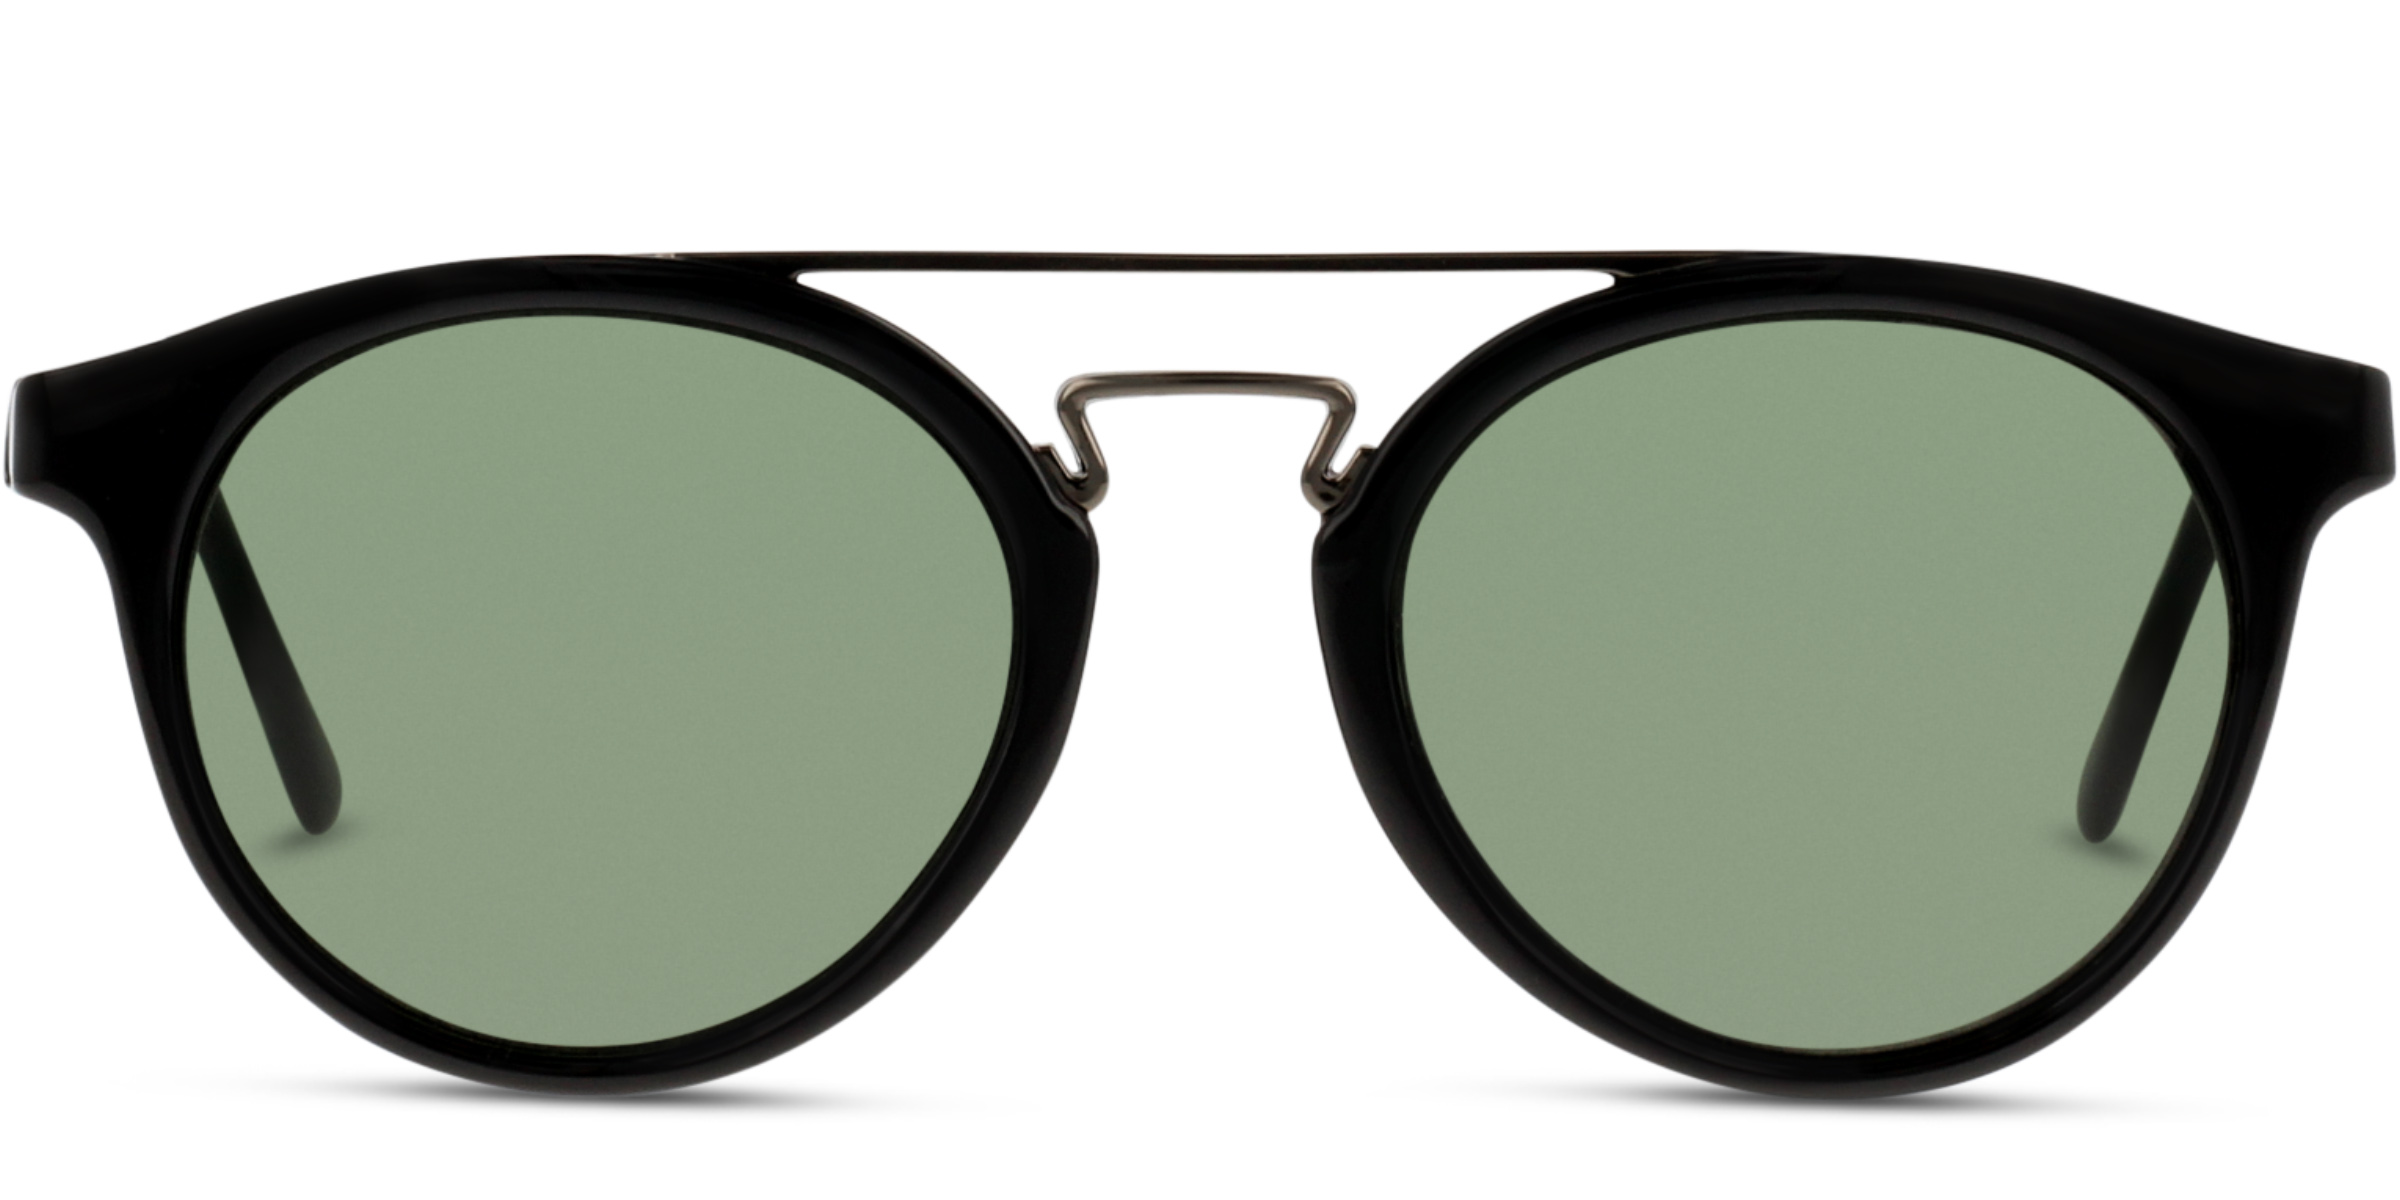 Buy Solaris SOEF04 sunglasses for women at For Eyes